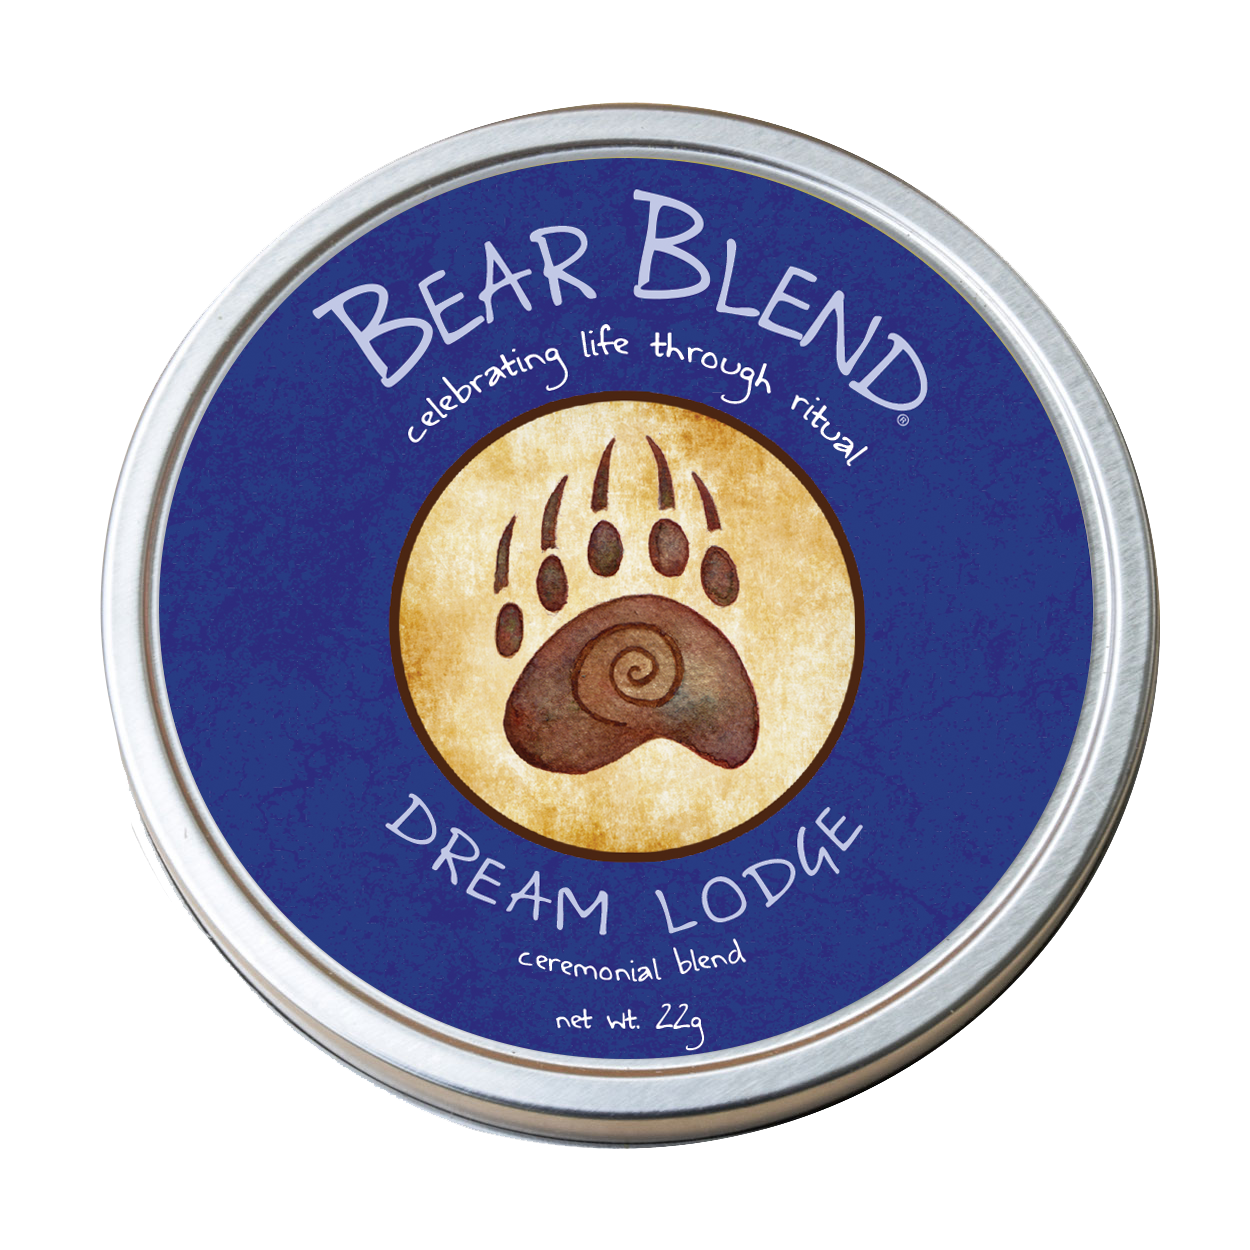 Bear Blend: Dream Lodge Herbal Ceremonial Blend